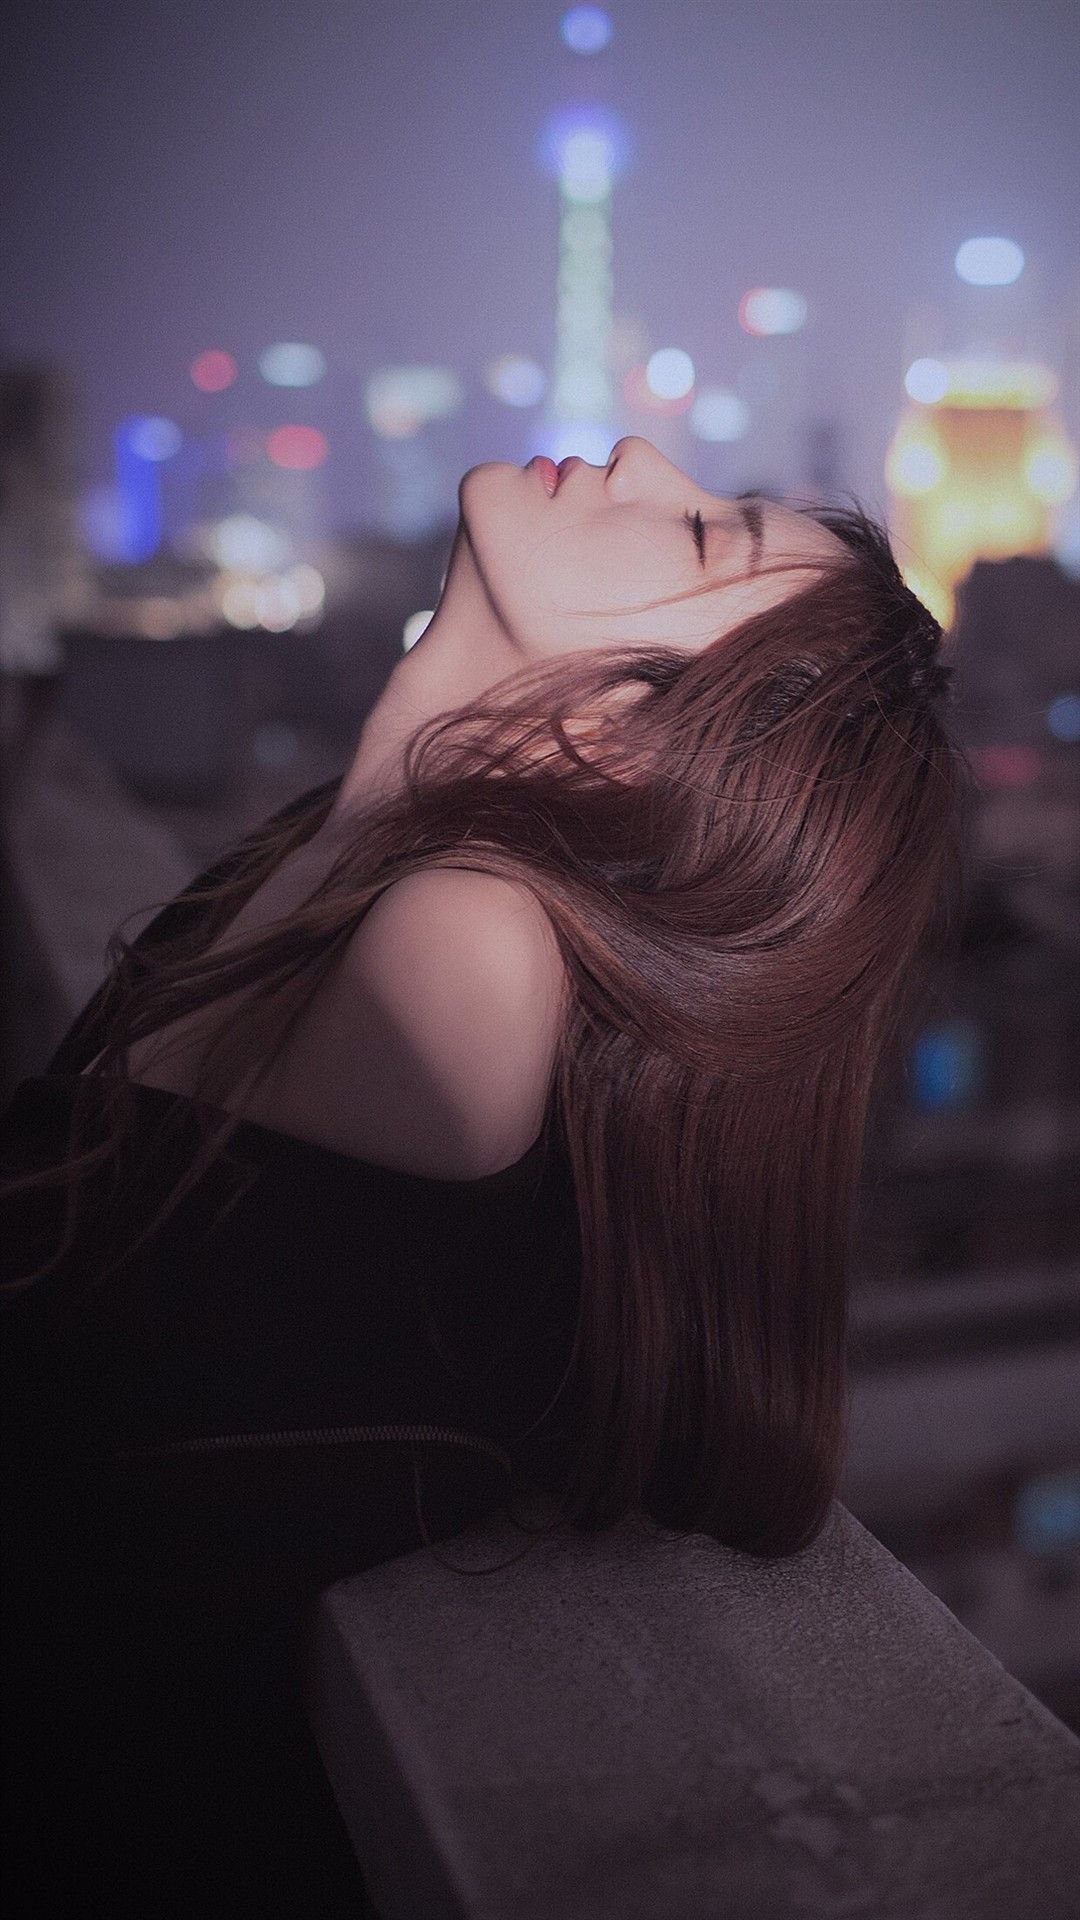 Alone Girl - Blur Background